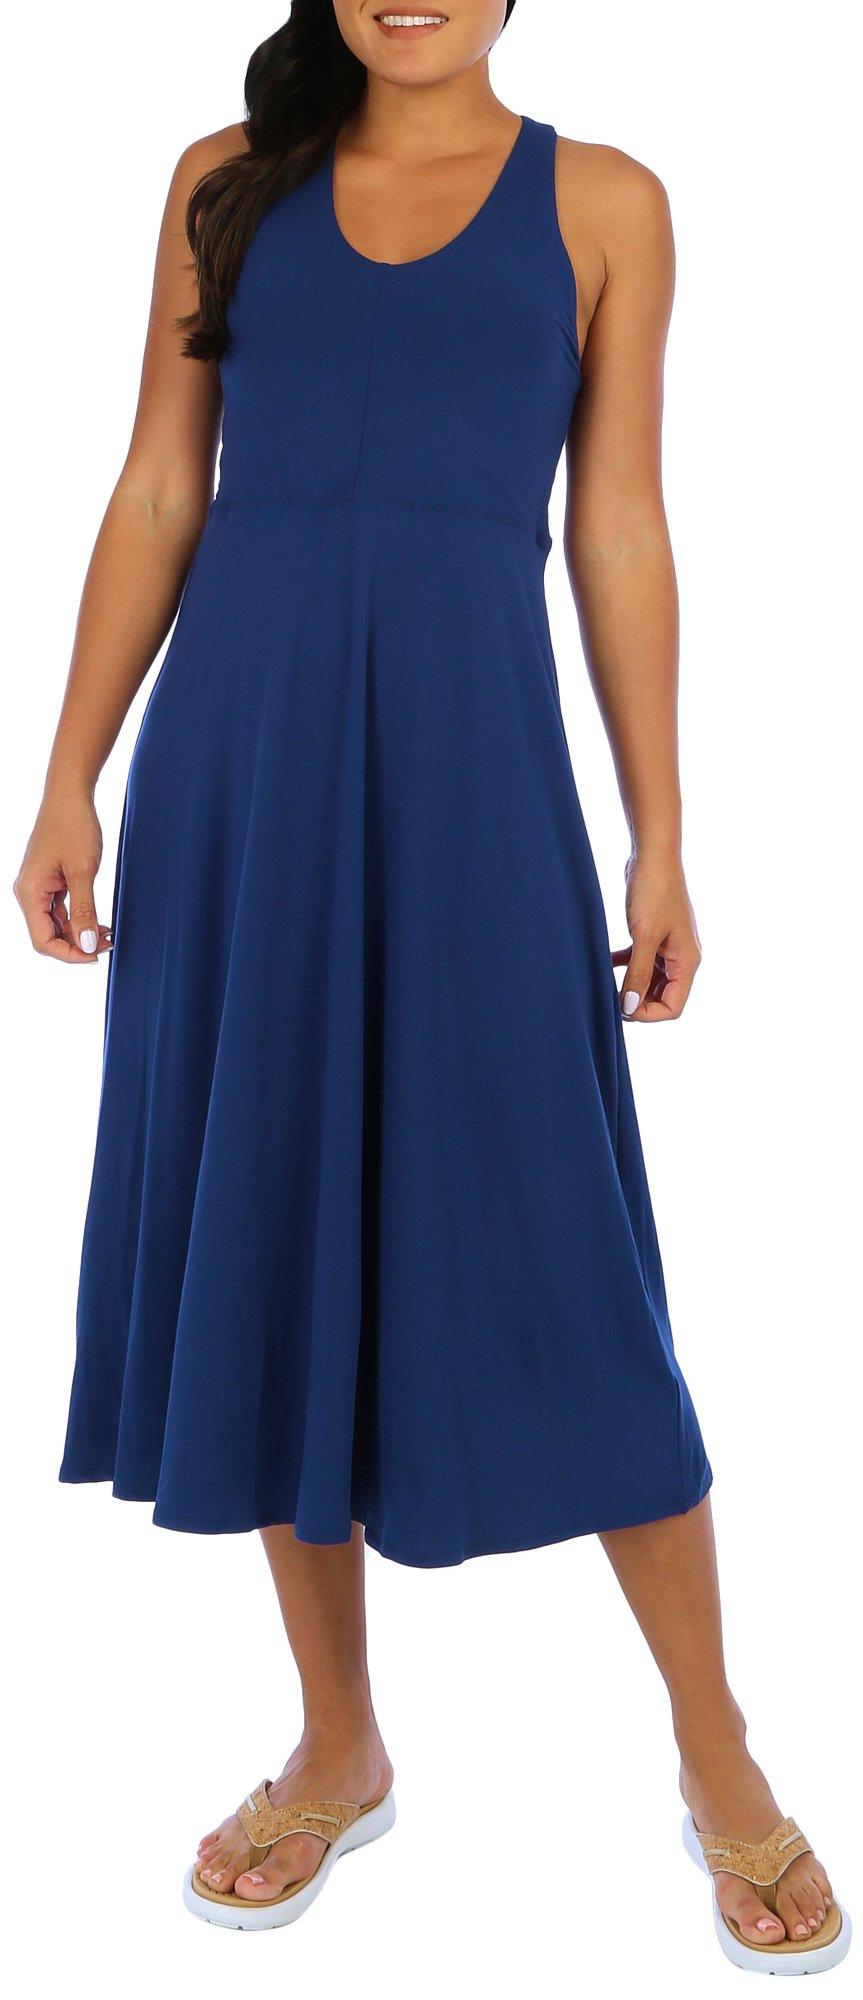 Reel Legends Womens Solid Mariner Sleeveless Dress